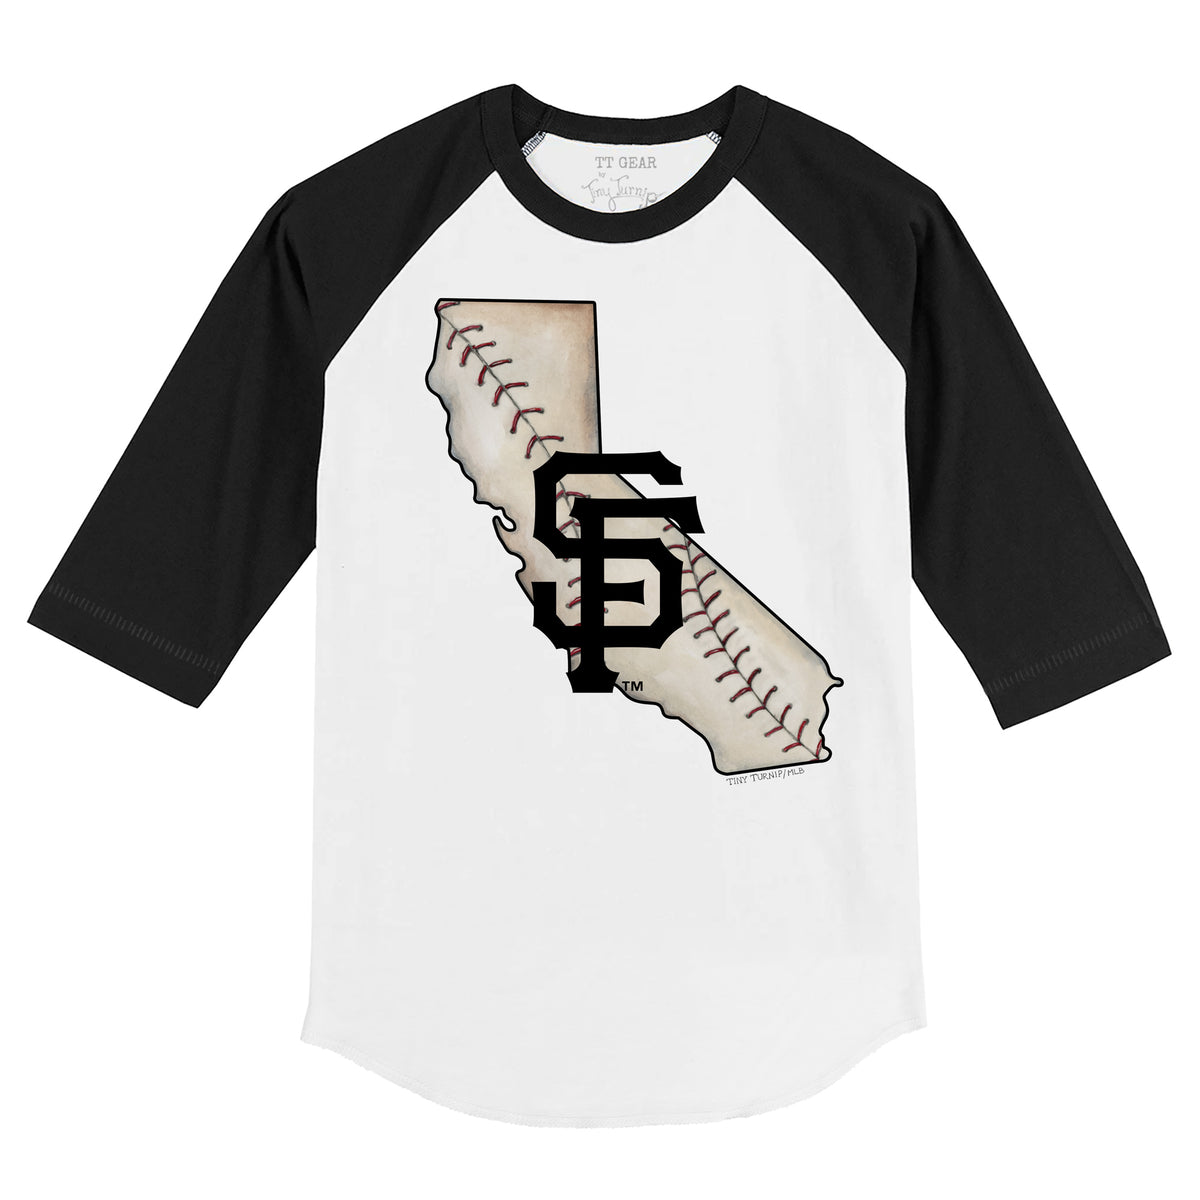 San Francisco Giants Tee  Sf giants outfit, Sf giants gear, Black